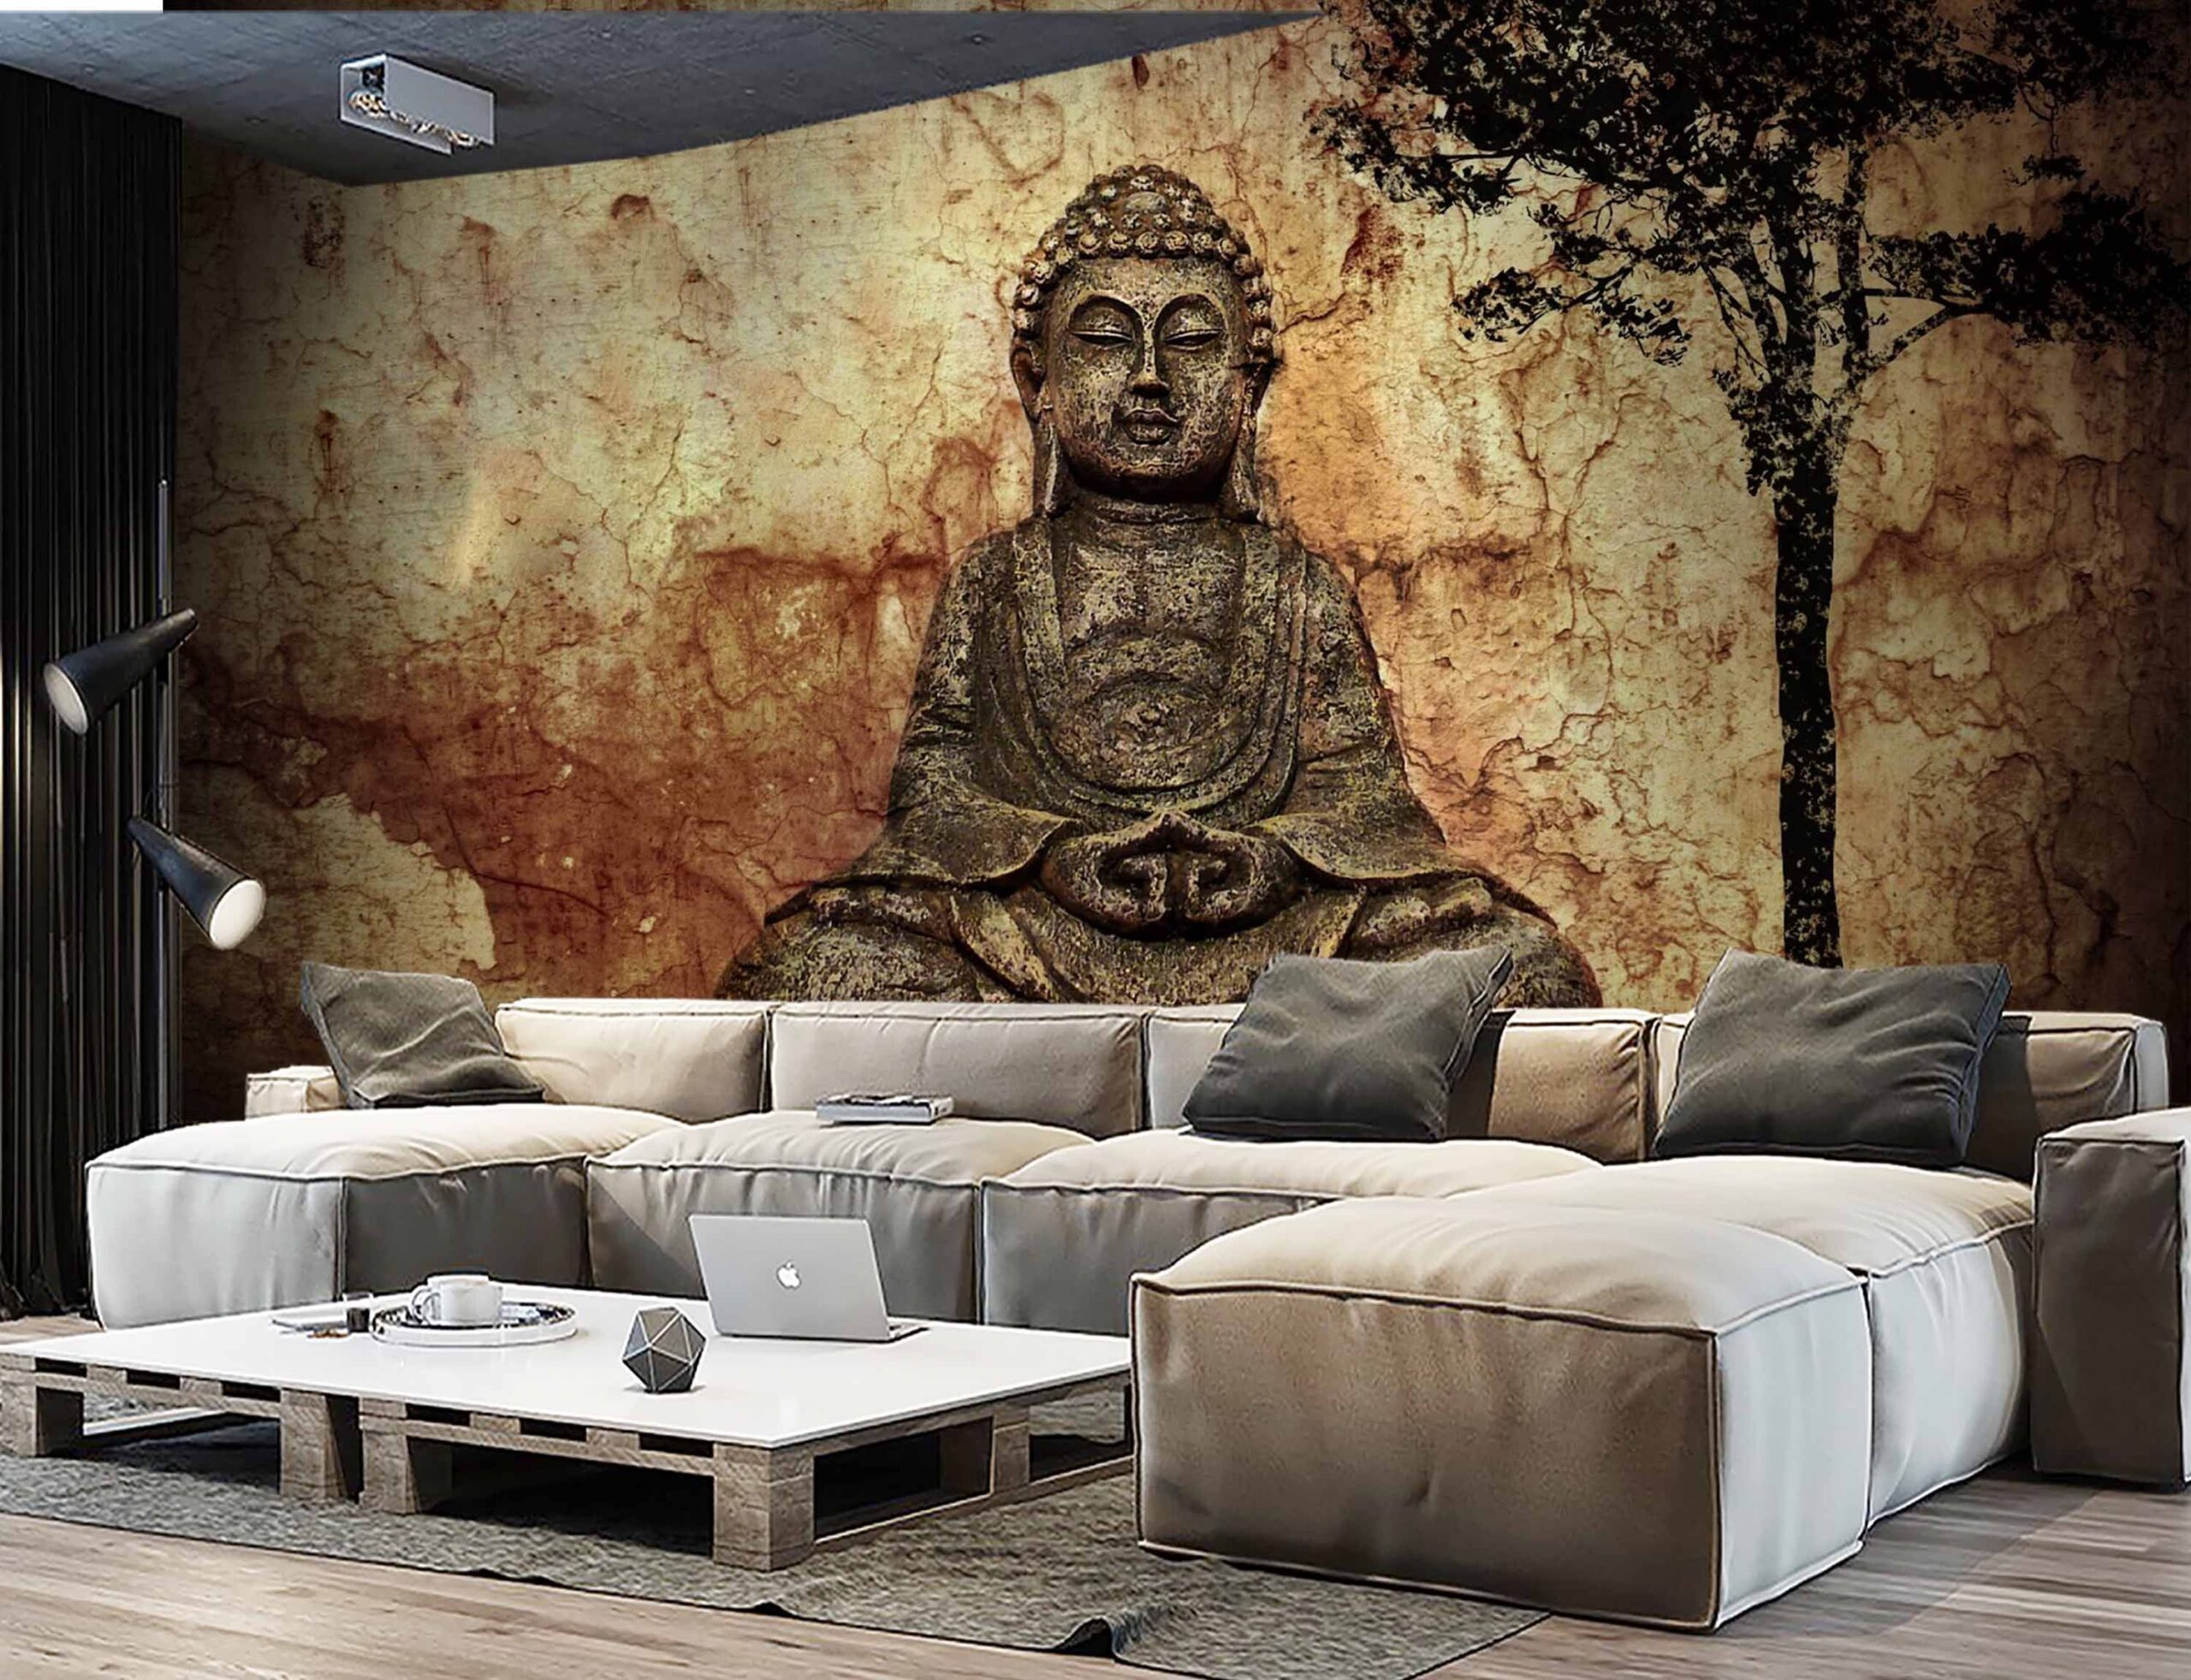 Buy Online - Meditating Buddha Wallpaper, 3D Buddha Wallpaper, Removable  Peel & Stick Wallpaper, Buddha Wall Mural, Self Adhesive Vinyl Wall Sticker  in US